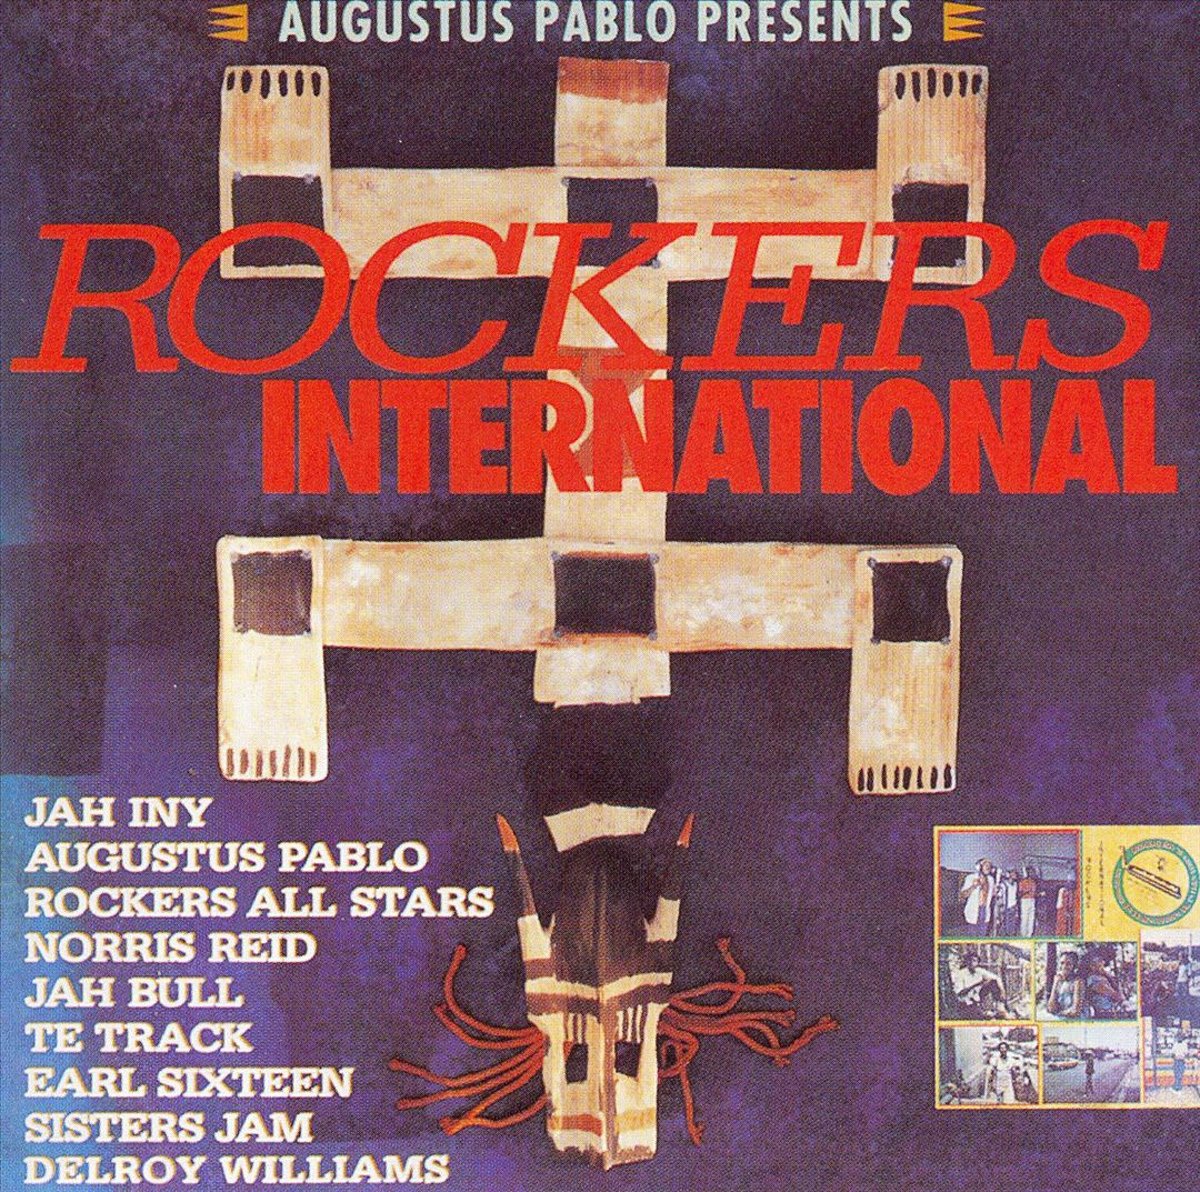 VA - Augustus Pablo Presents Rockers International (LP)